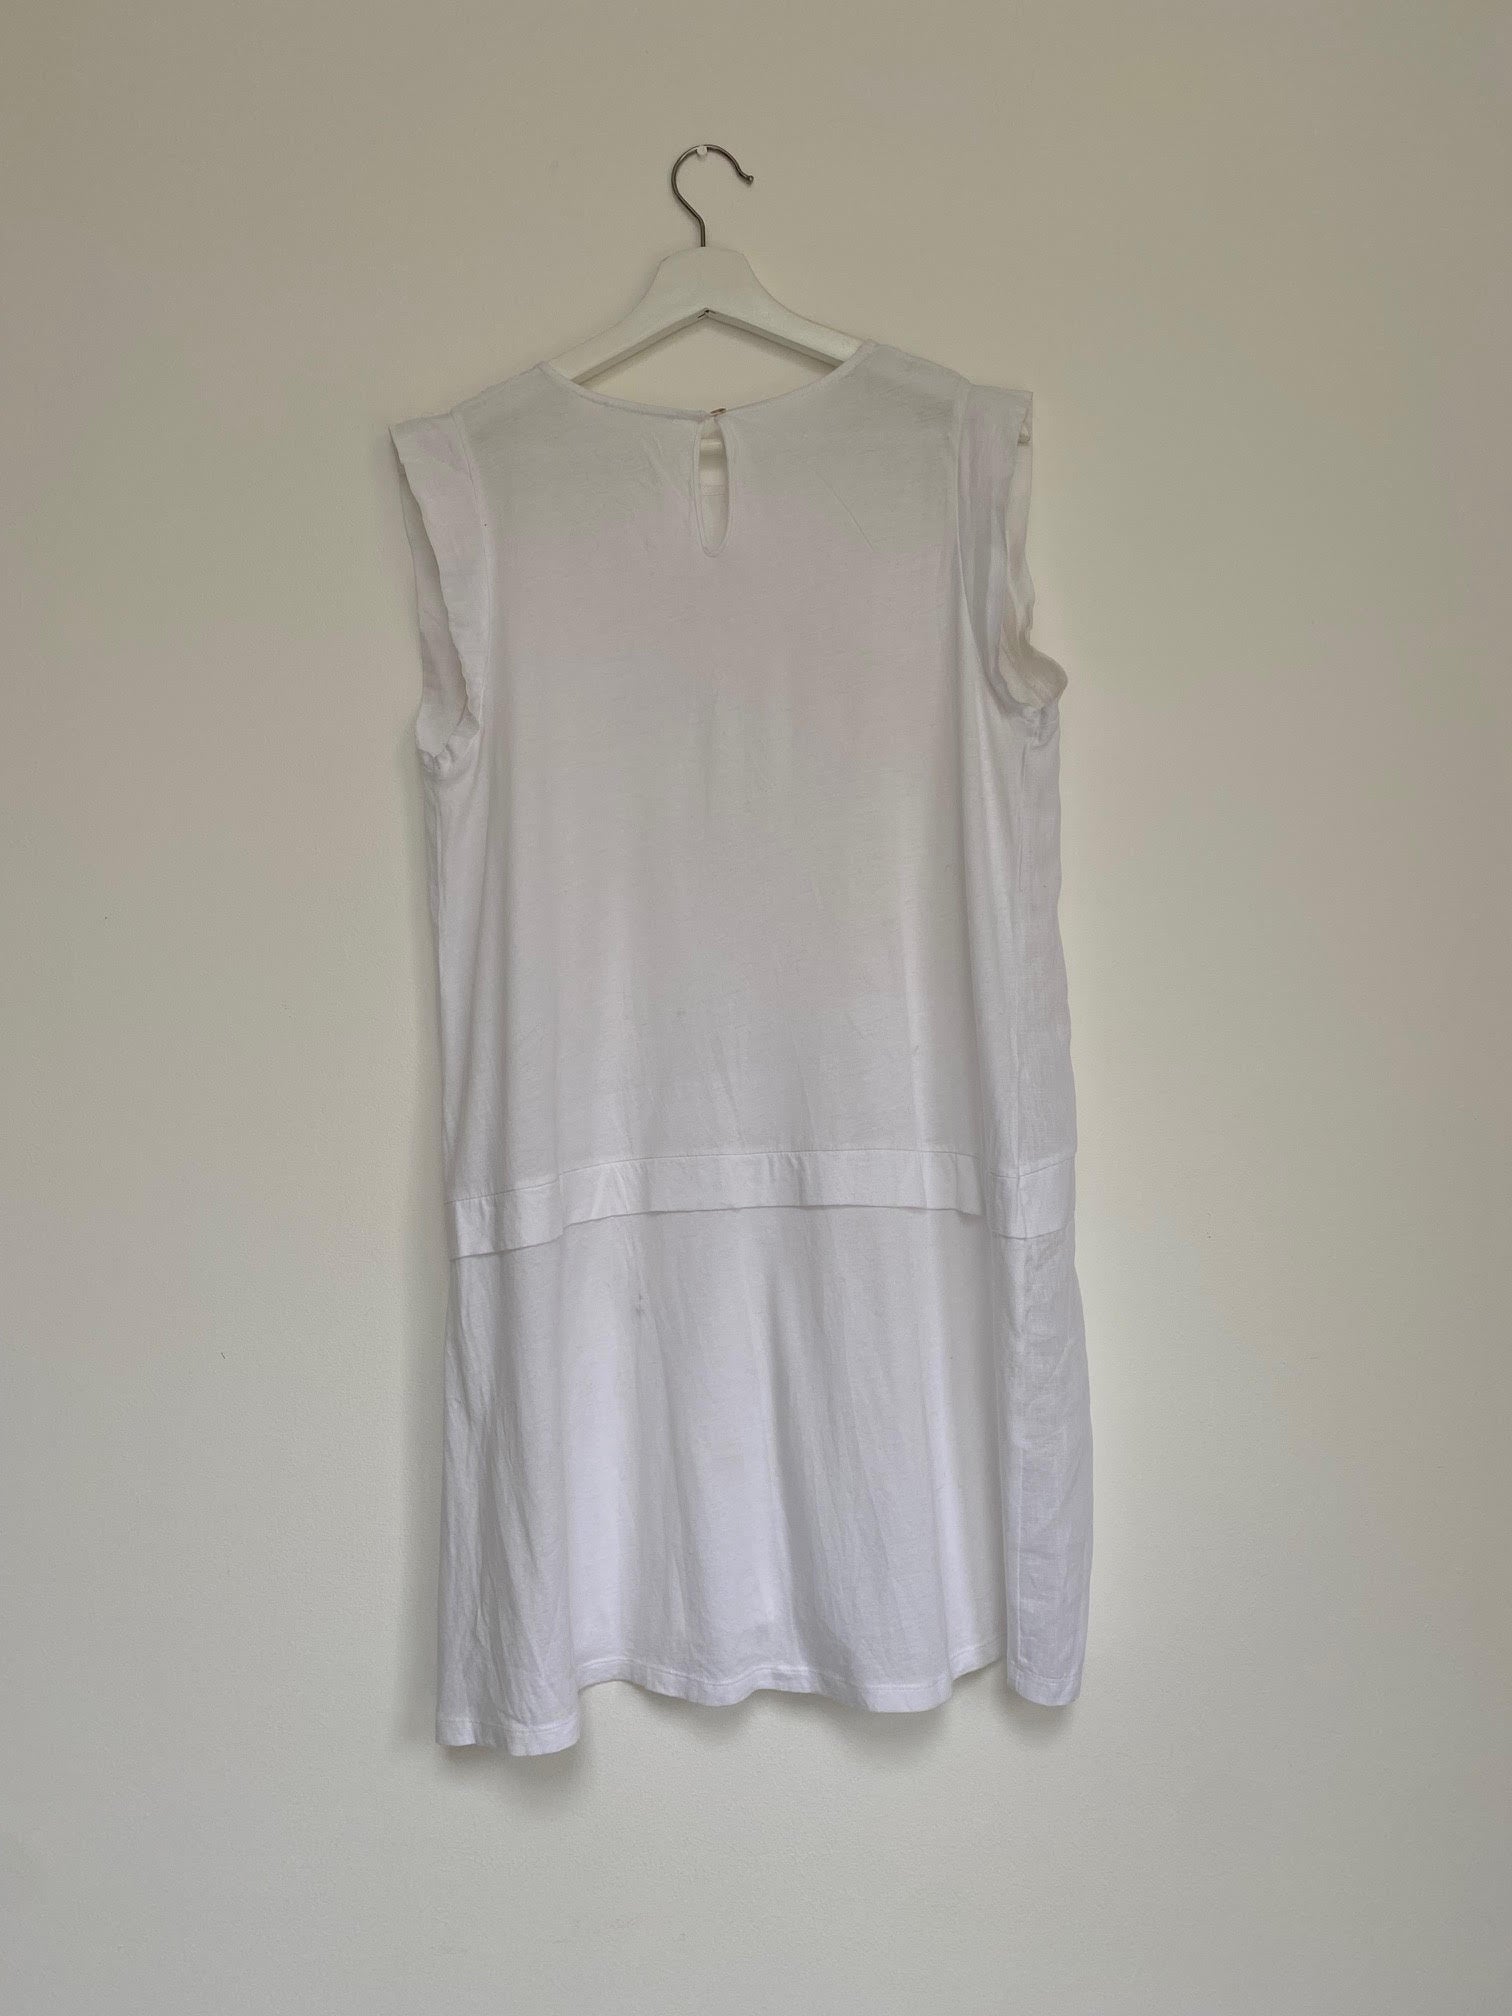 White Lace Dress Size S